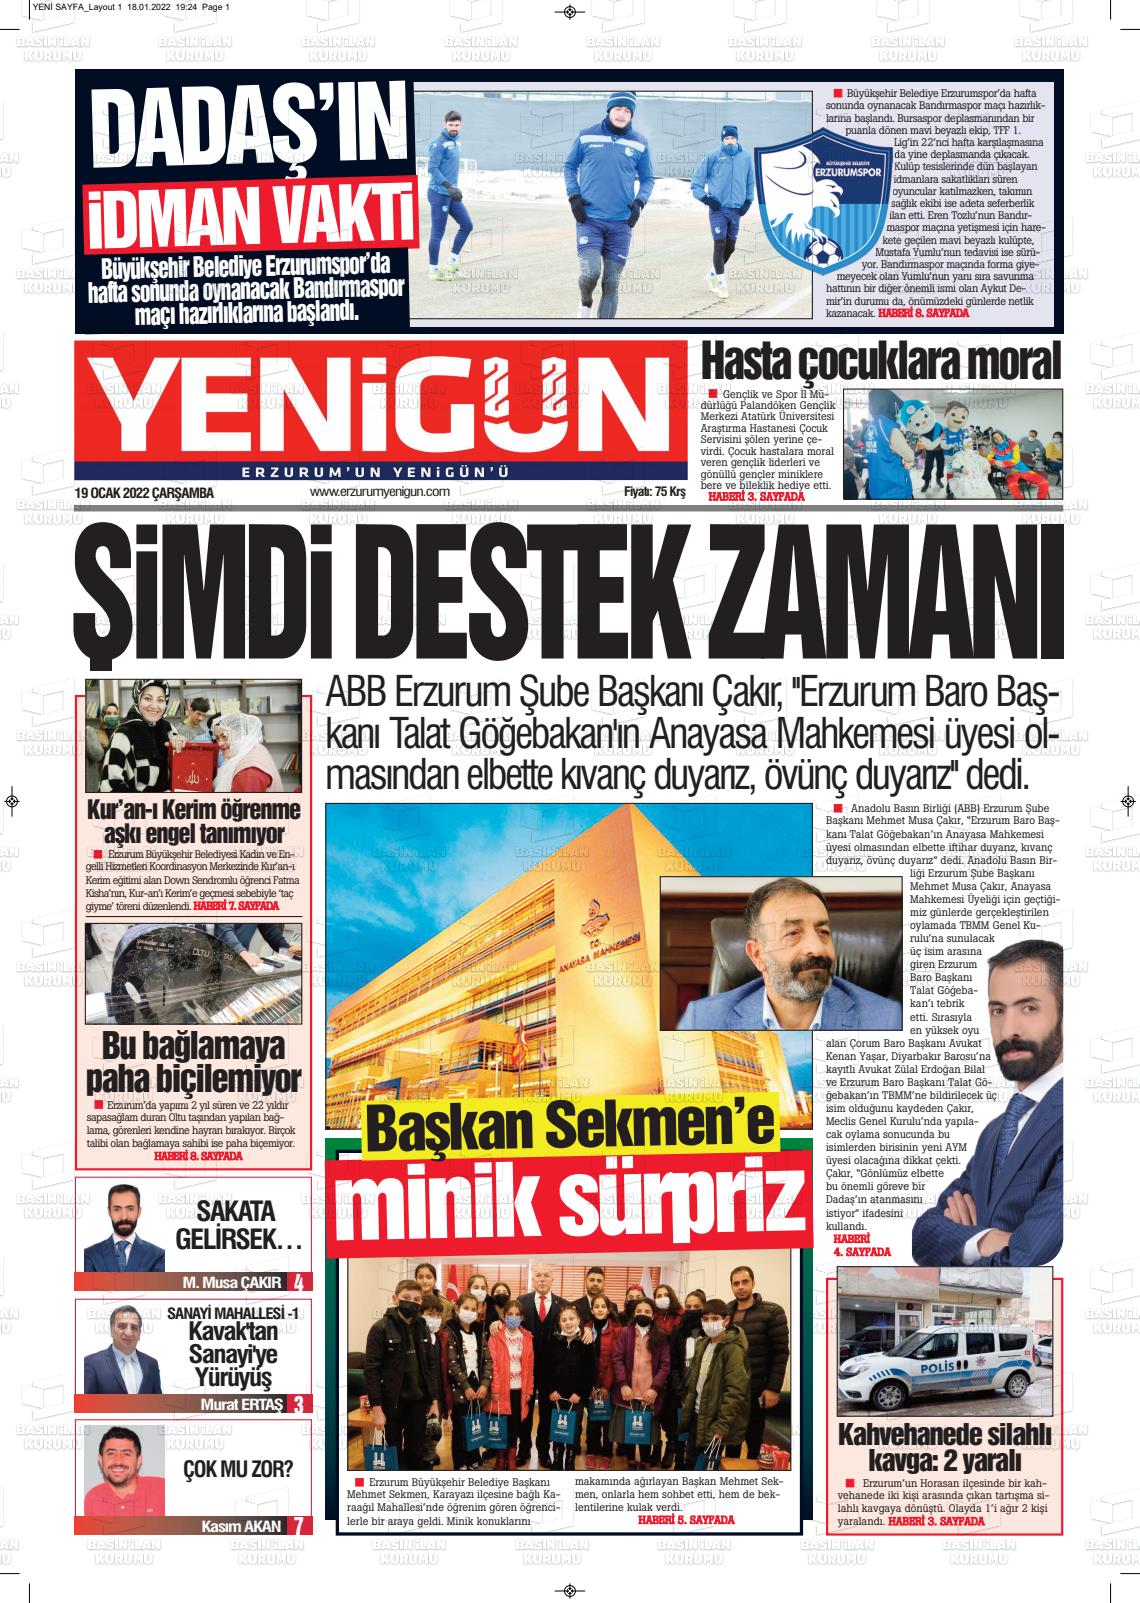 19 Ocak 2022 Erzurum Yenigün Gazete Manşeti